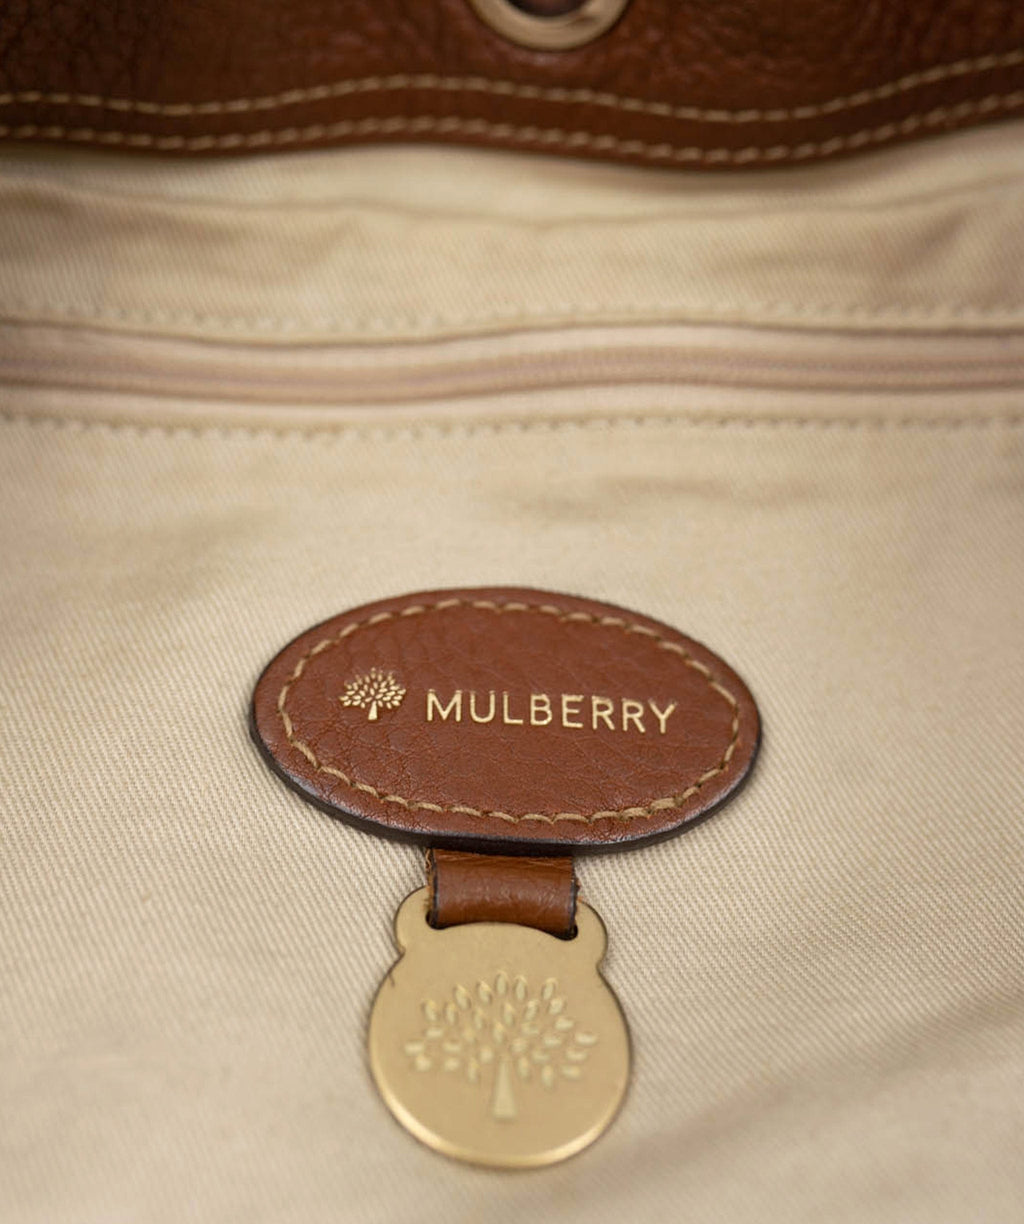 Vintage Mulberry Large Tote Bag, Scotch grain | eBay